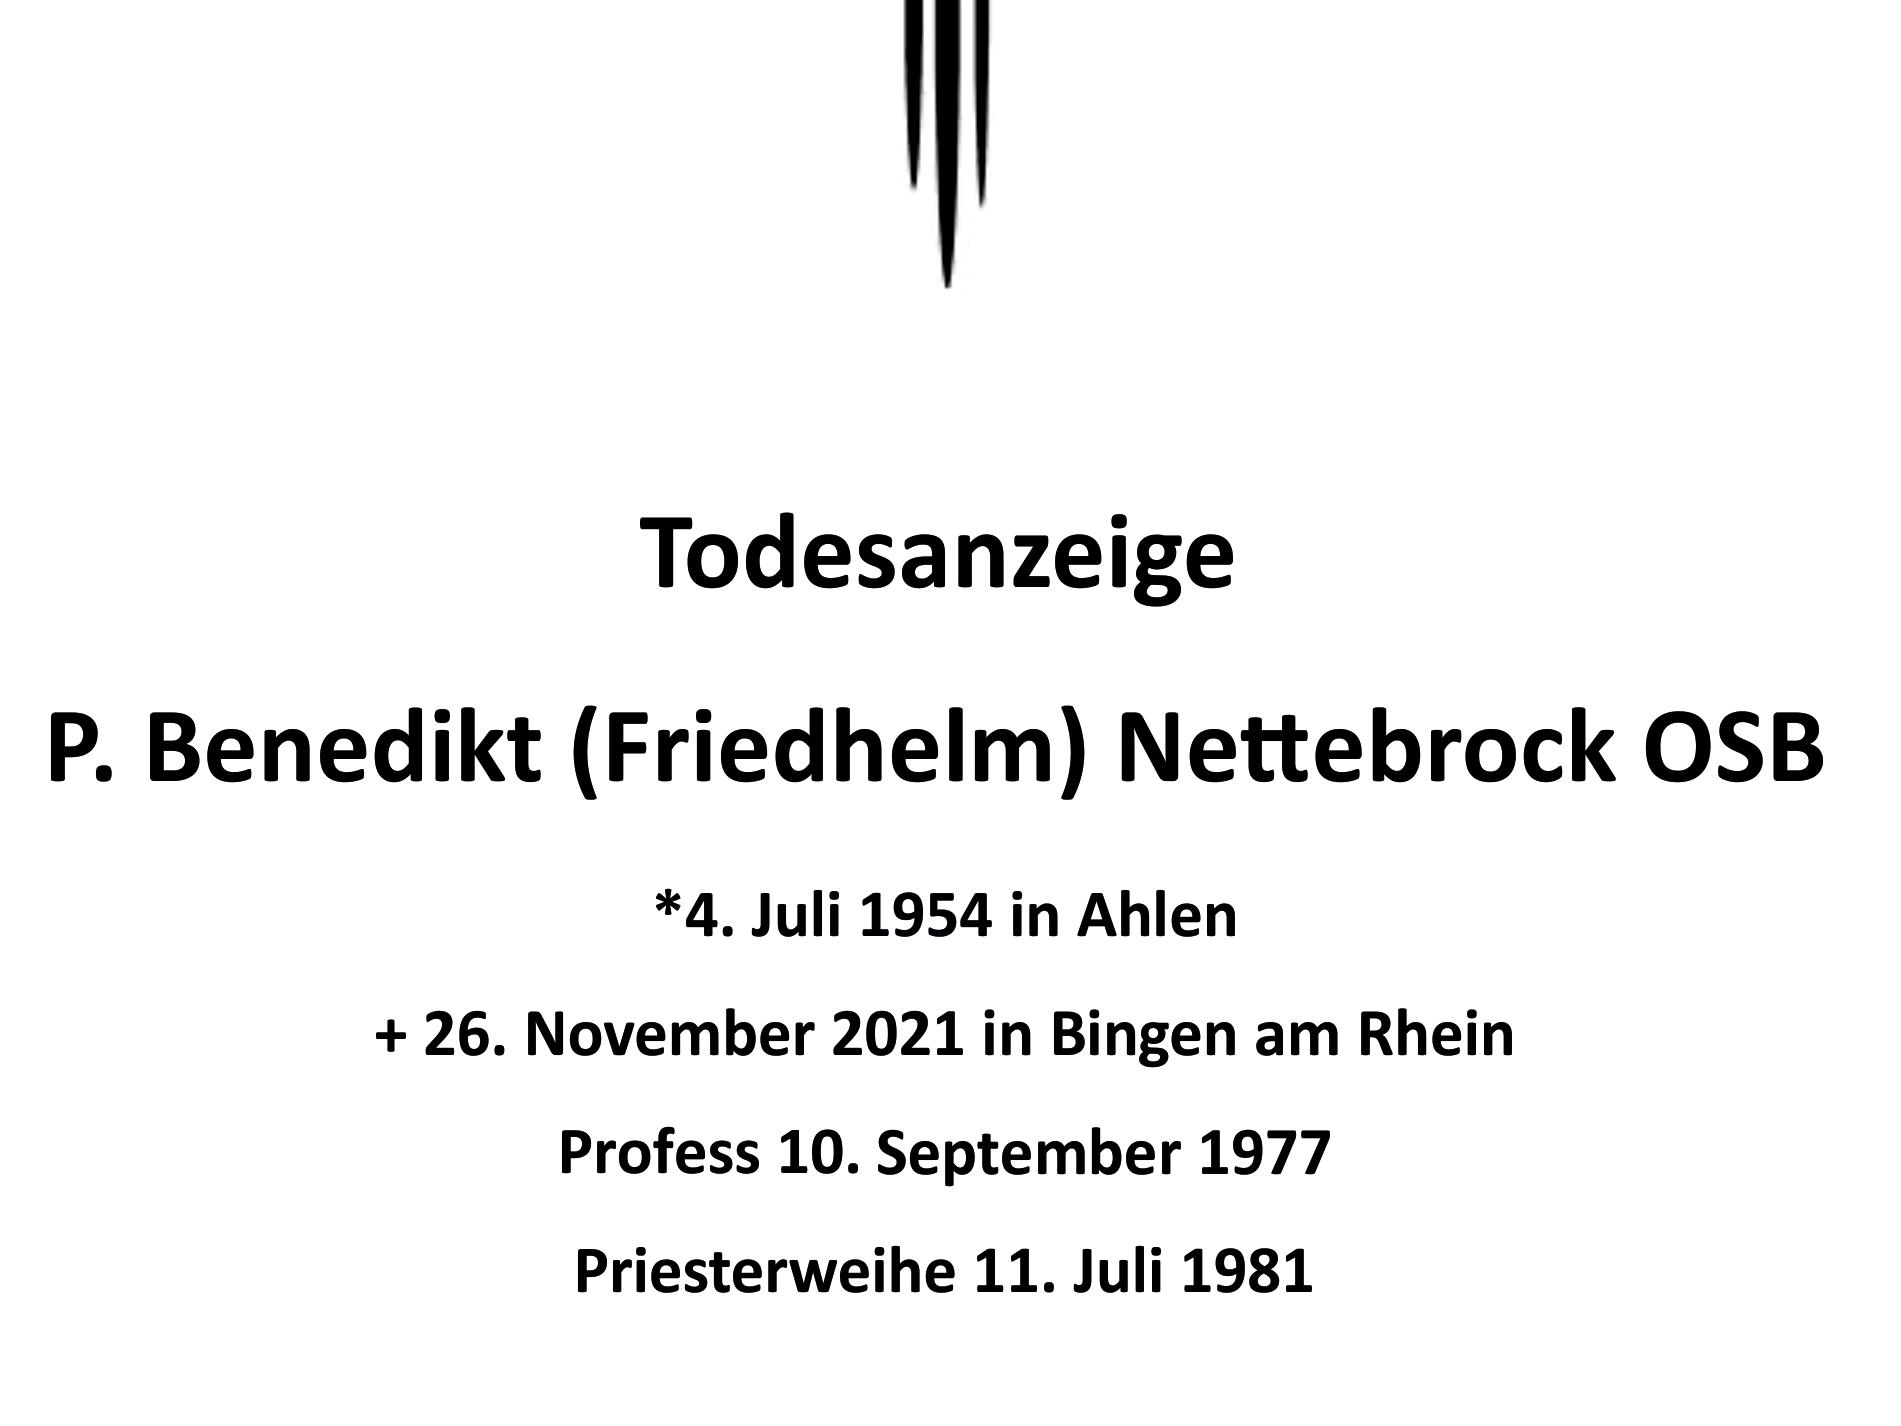 Todesanzeige P. Benedikt (Friedhelm) Nettebrock OSB (c) Kloster Jakobsberg